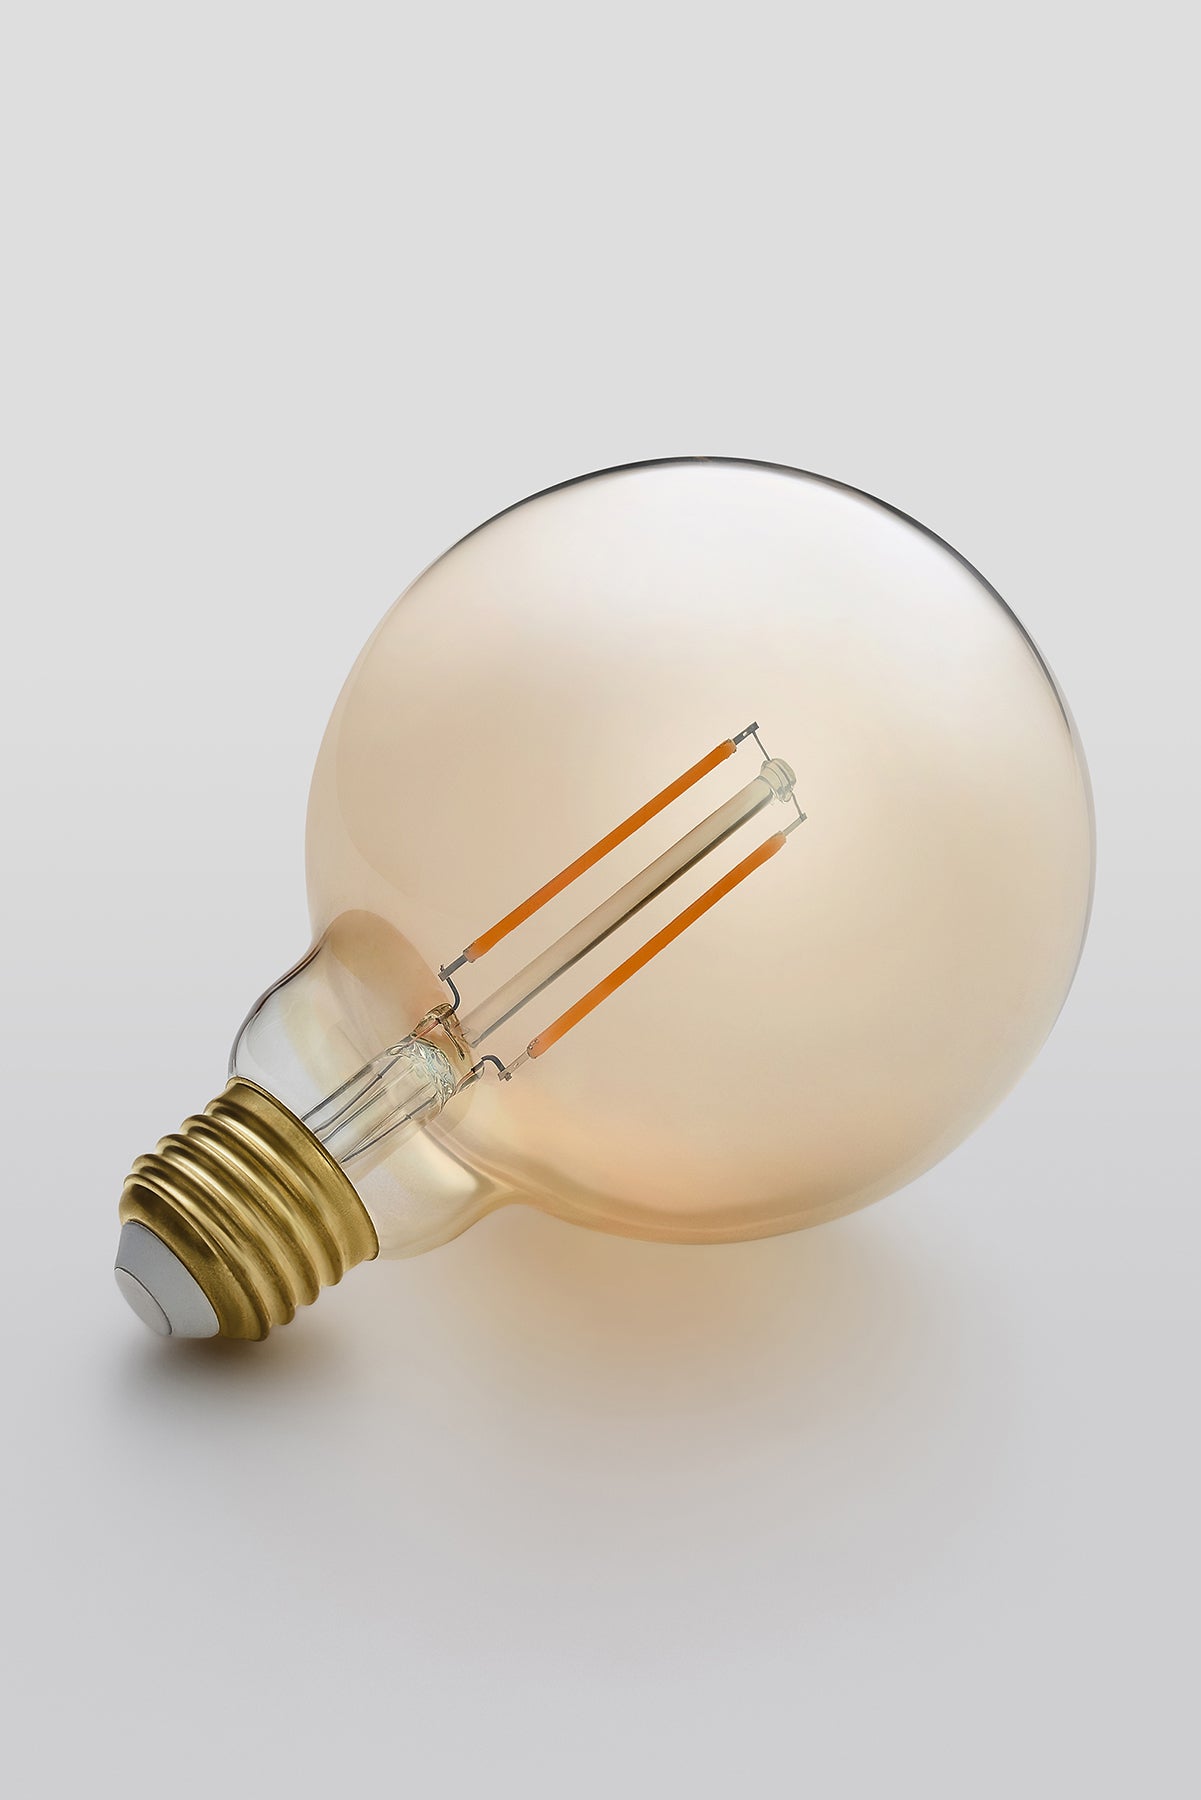 Mavisten Edition's G30 globe LED bulb features full-range, flicker-free dimming to set the perfect mood.